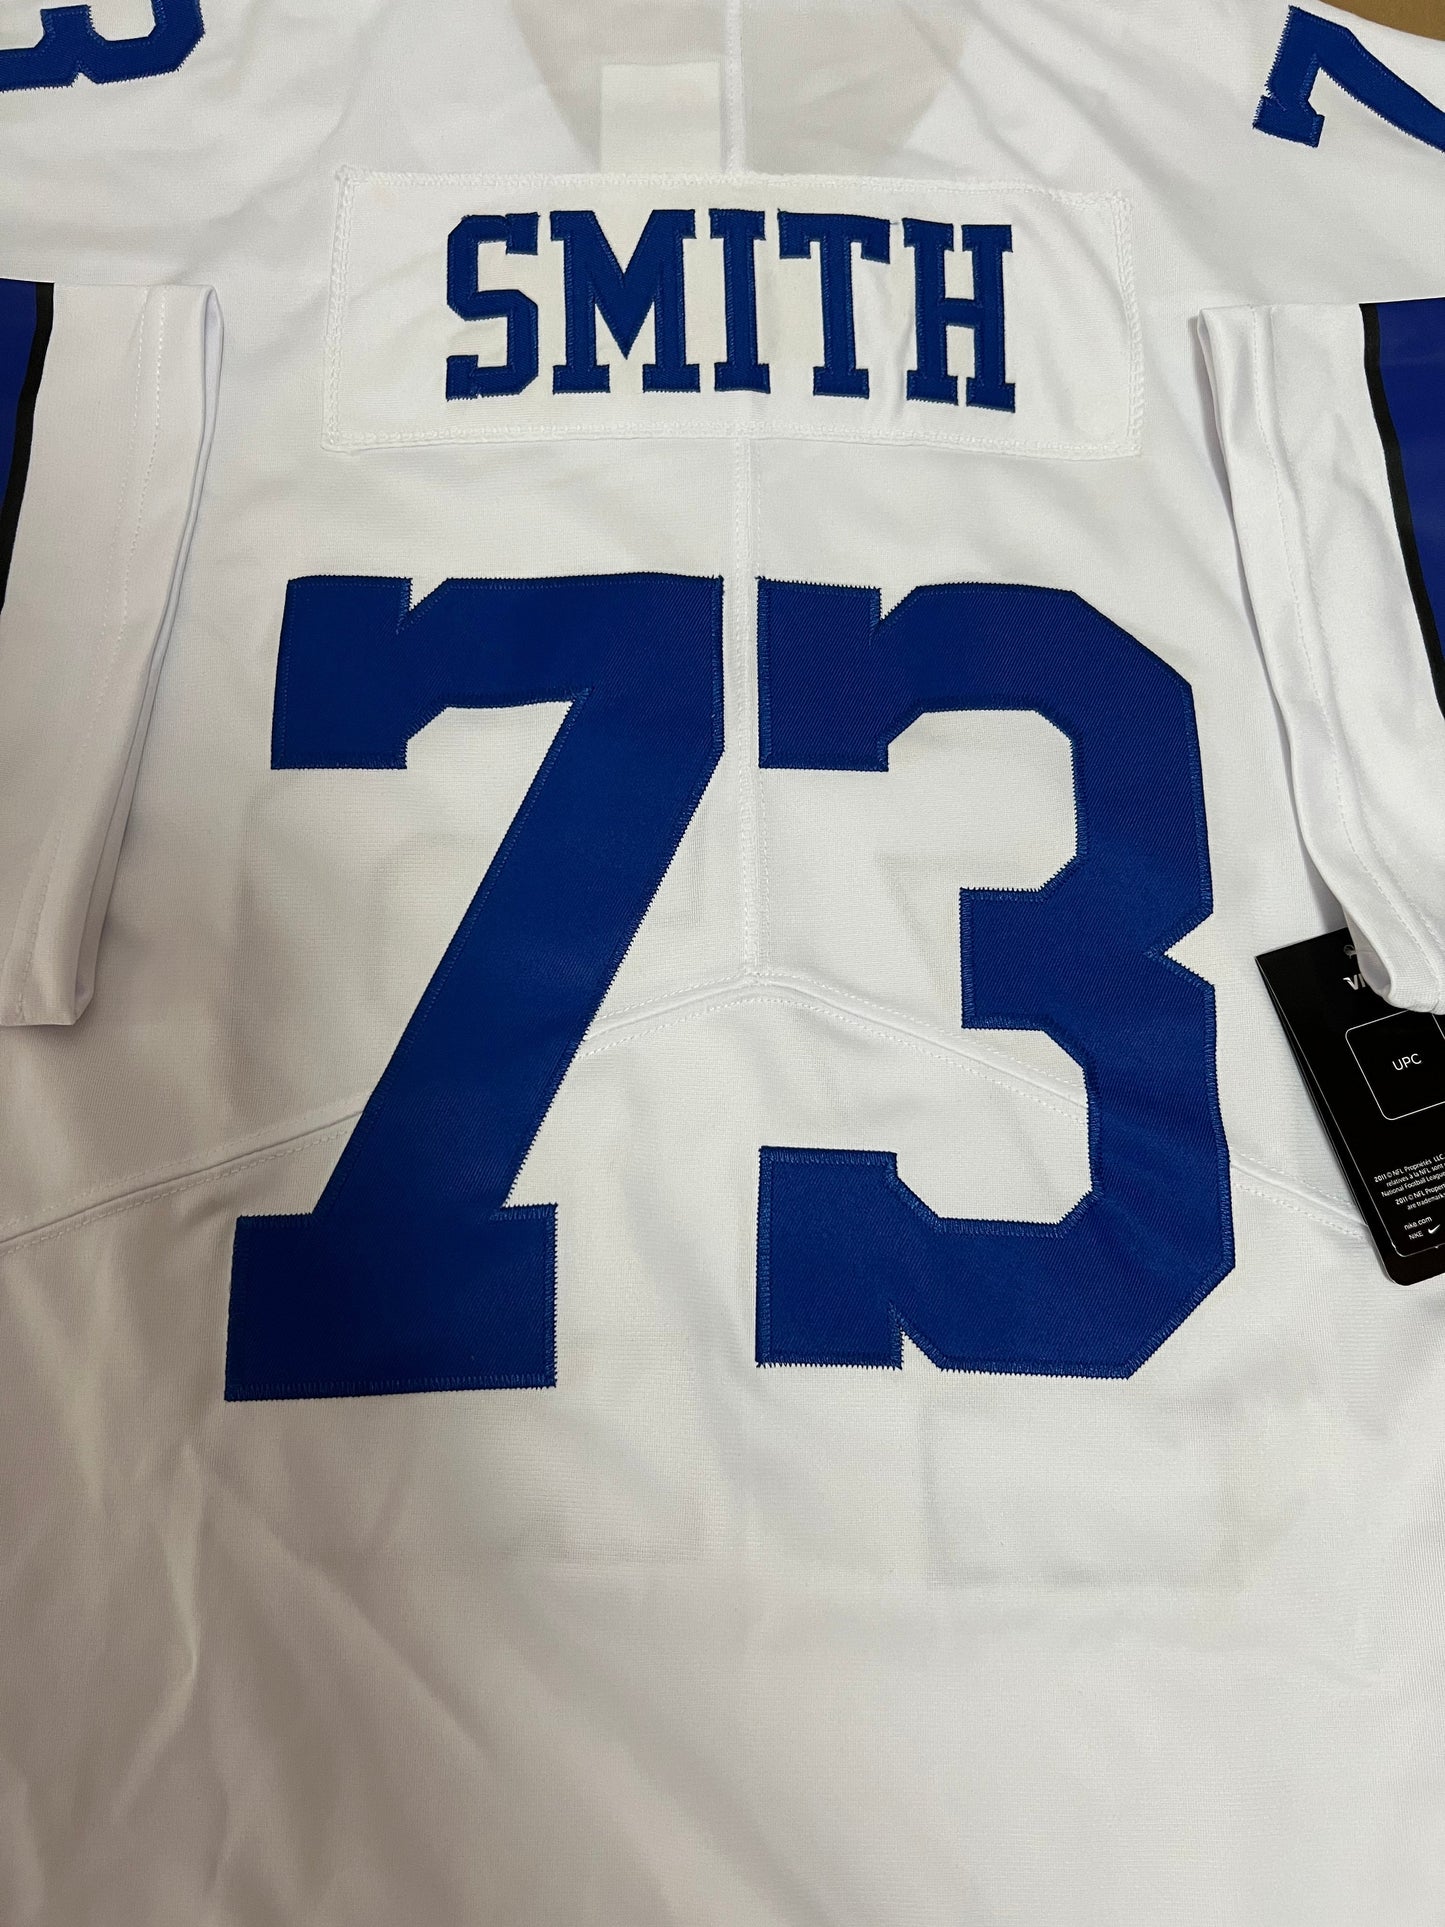 Tyler Smith Jerseys White D.Cowboys New Number 73  Football Jerseys